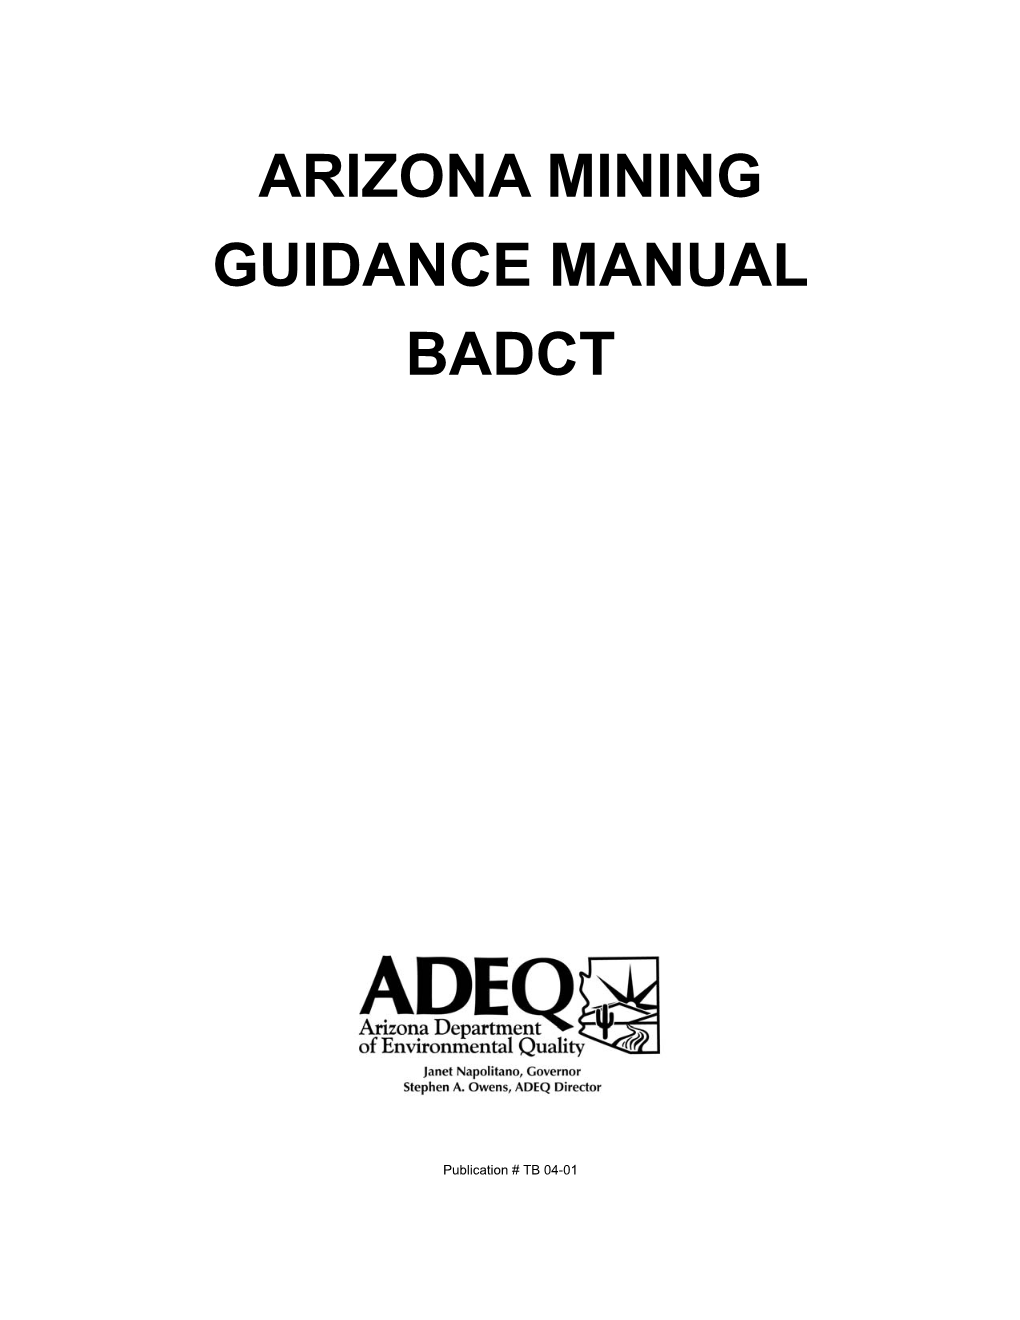 BADCT-Arizona Mining Guidance Manual